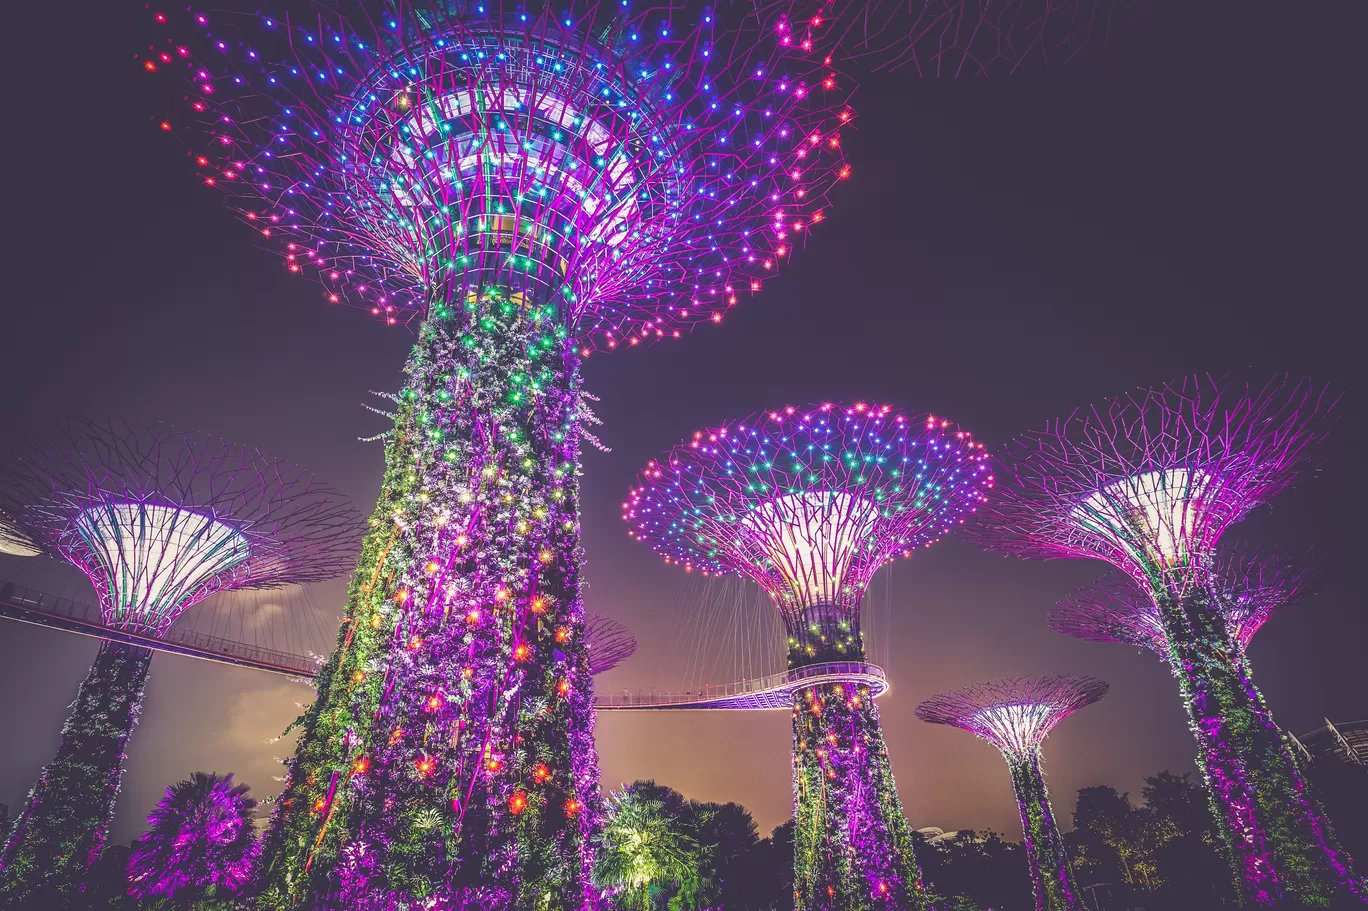 Photo of Singapore By thewanderjoy